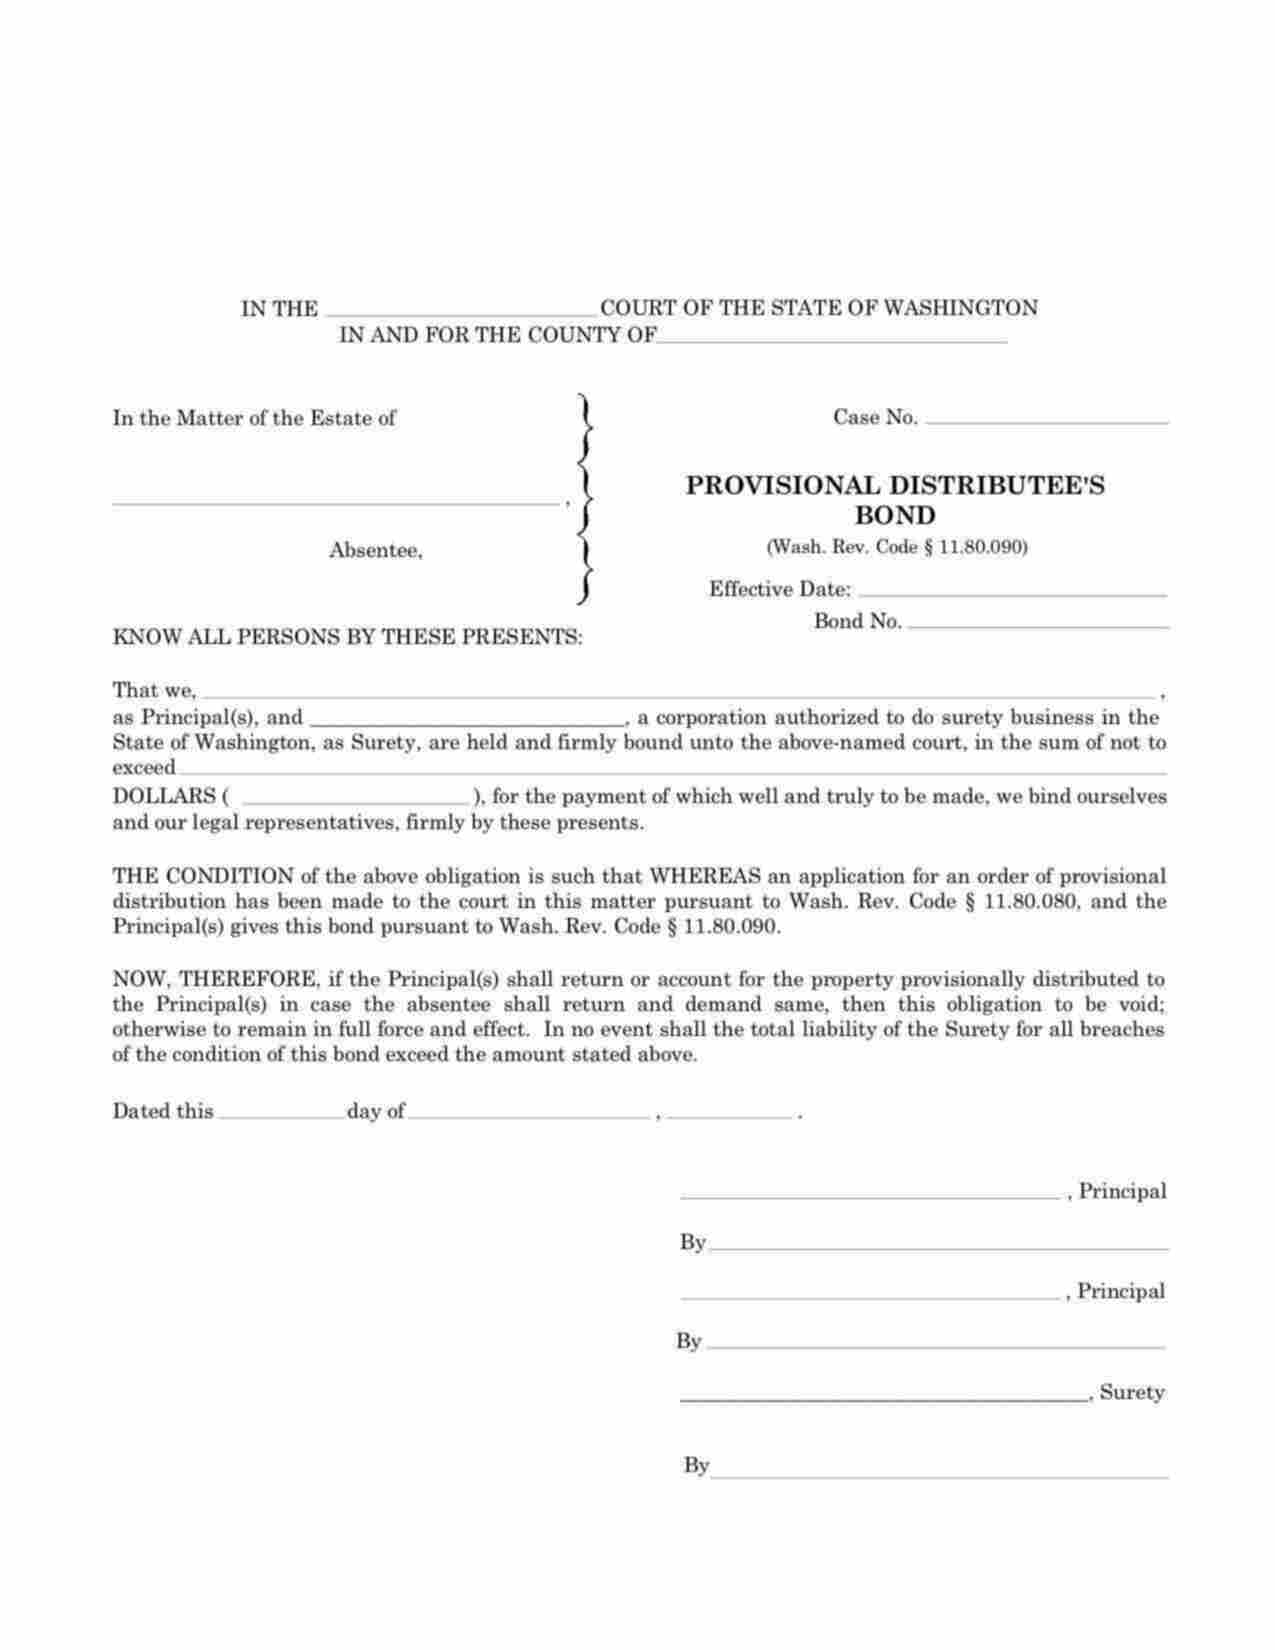 Washington Provisional Distributee Bond Form